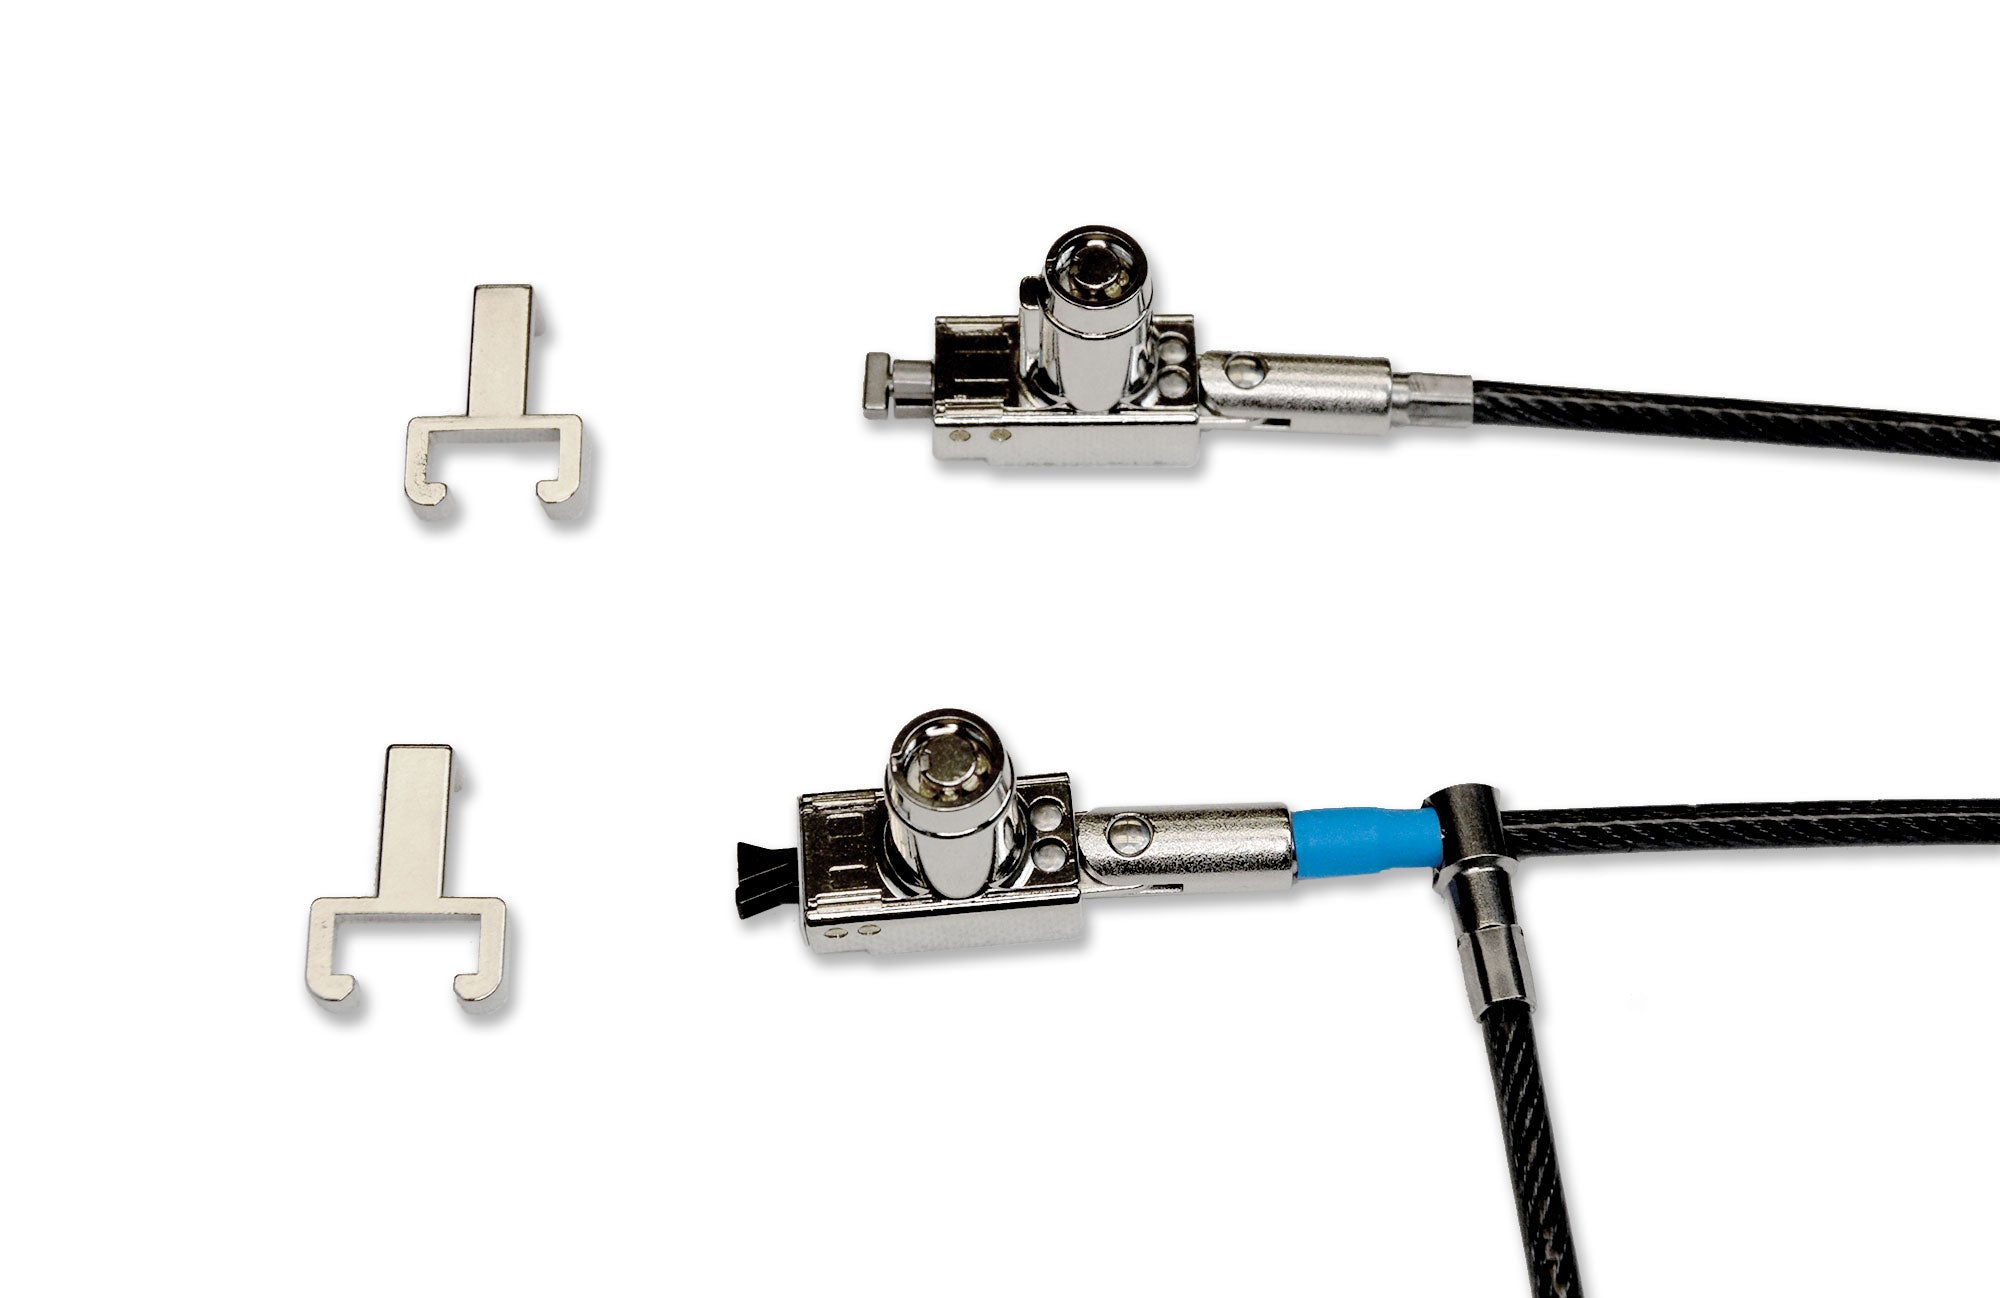 HP Nano Keyed Dual Head Cable Locks